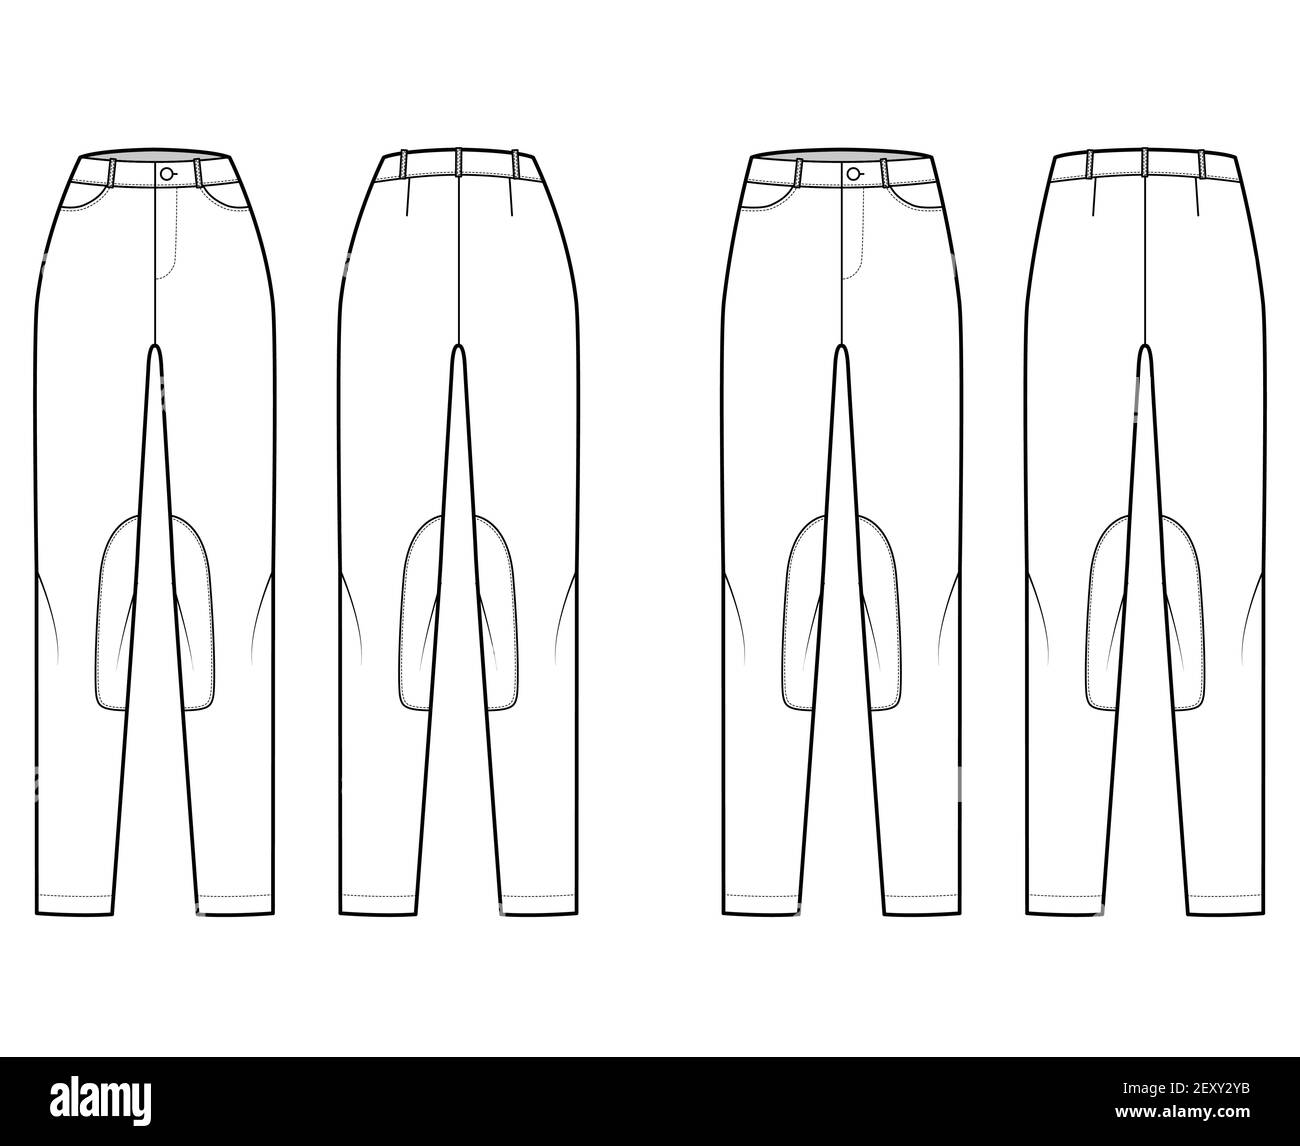 Set of Jeans Kentucky Jodhpurs Denim pants technical fashion ...